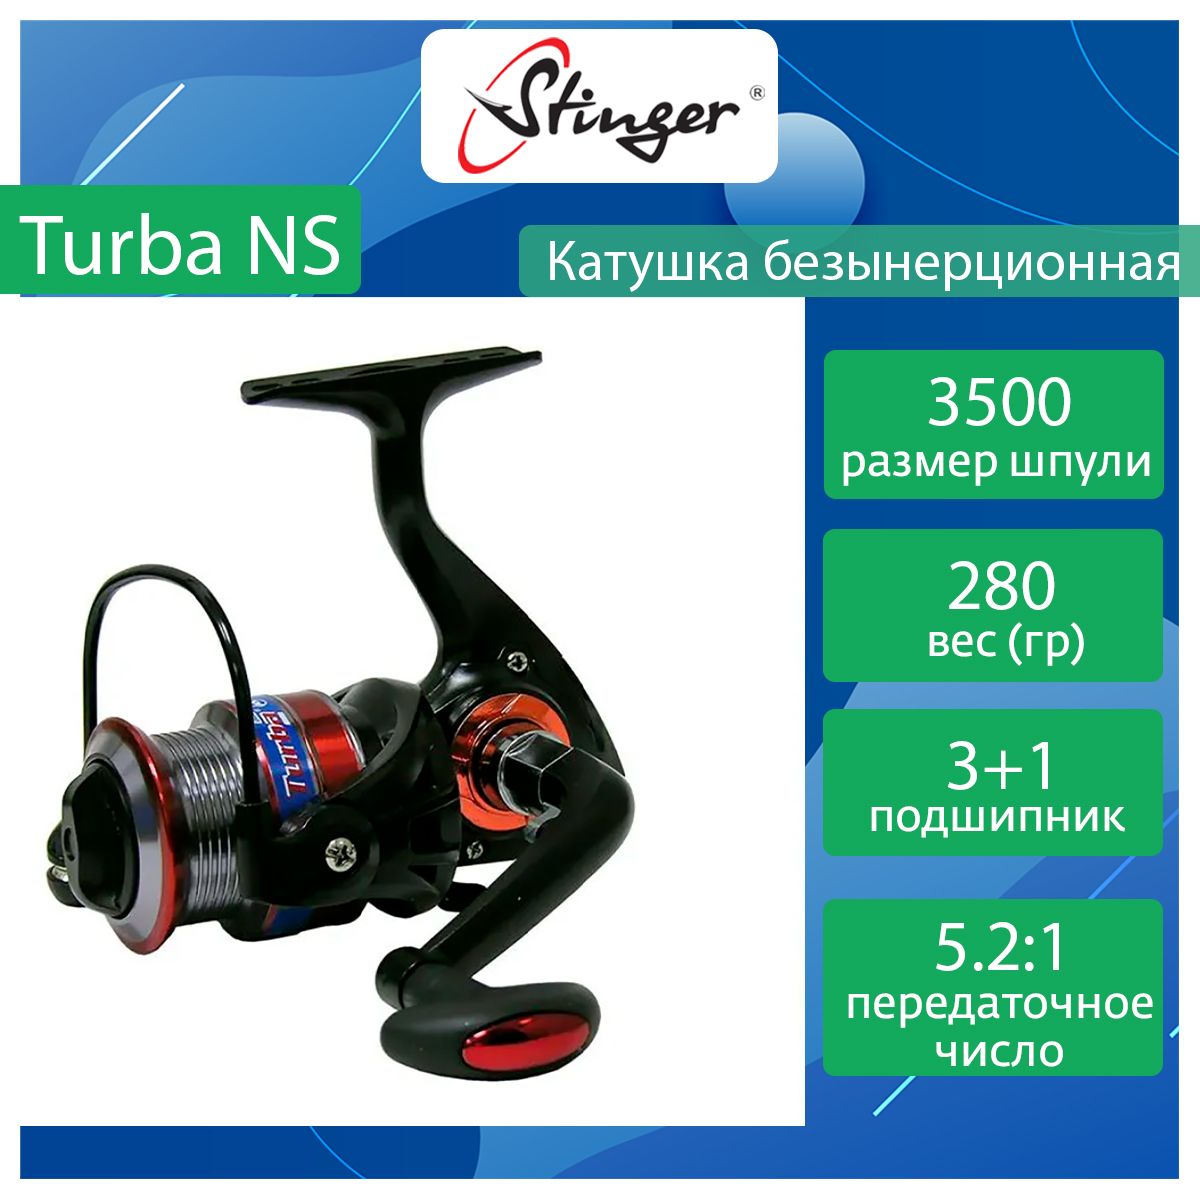 Катушка для рыбалки безынерционная Stinger Turba NS ef56847